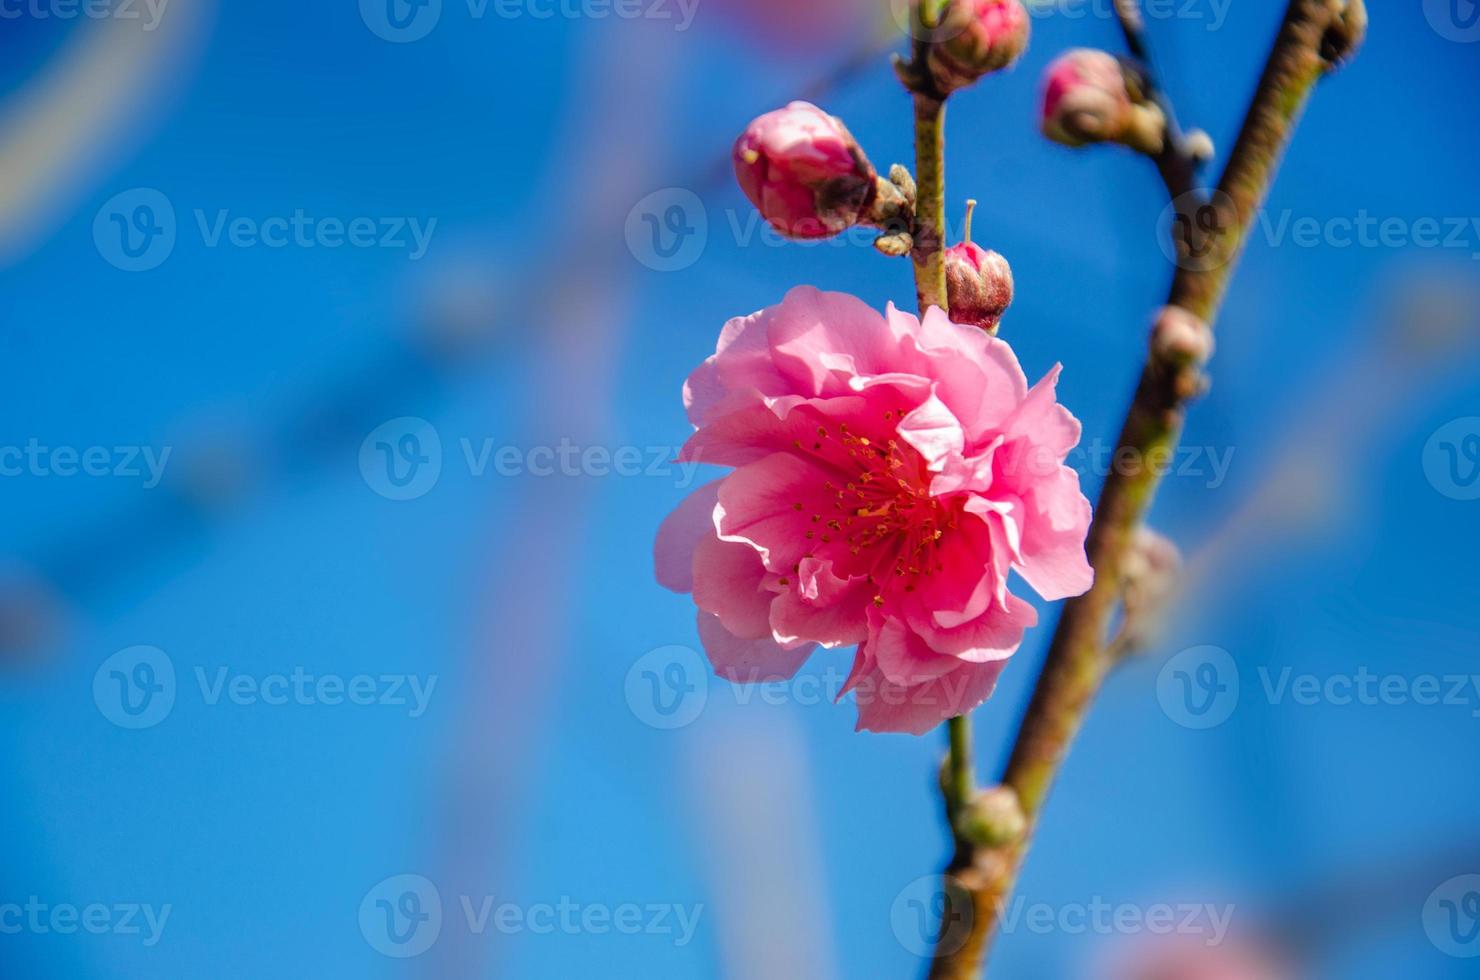 flor de ameixa rosa florescendo fundo azul foto